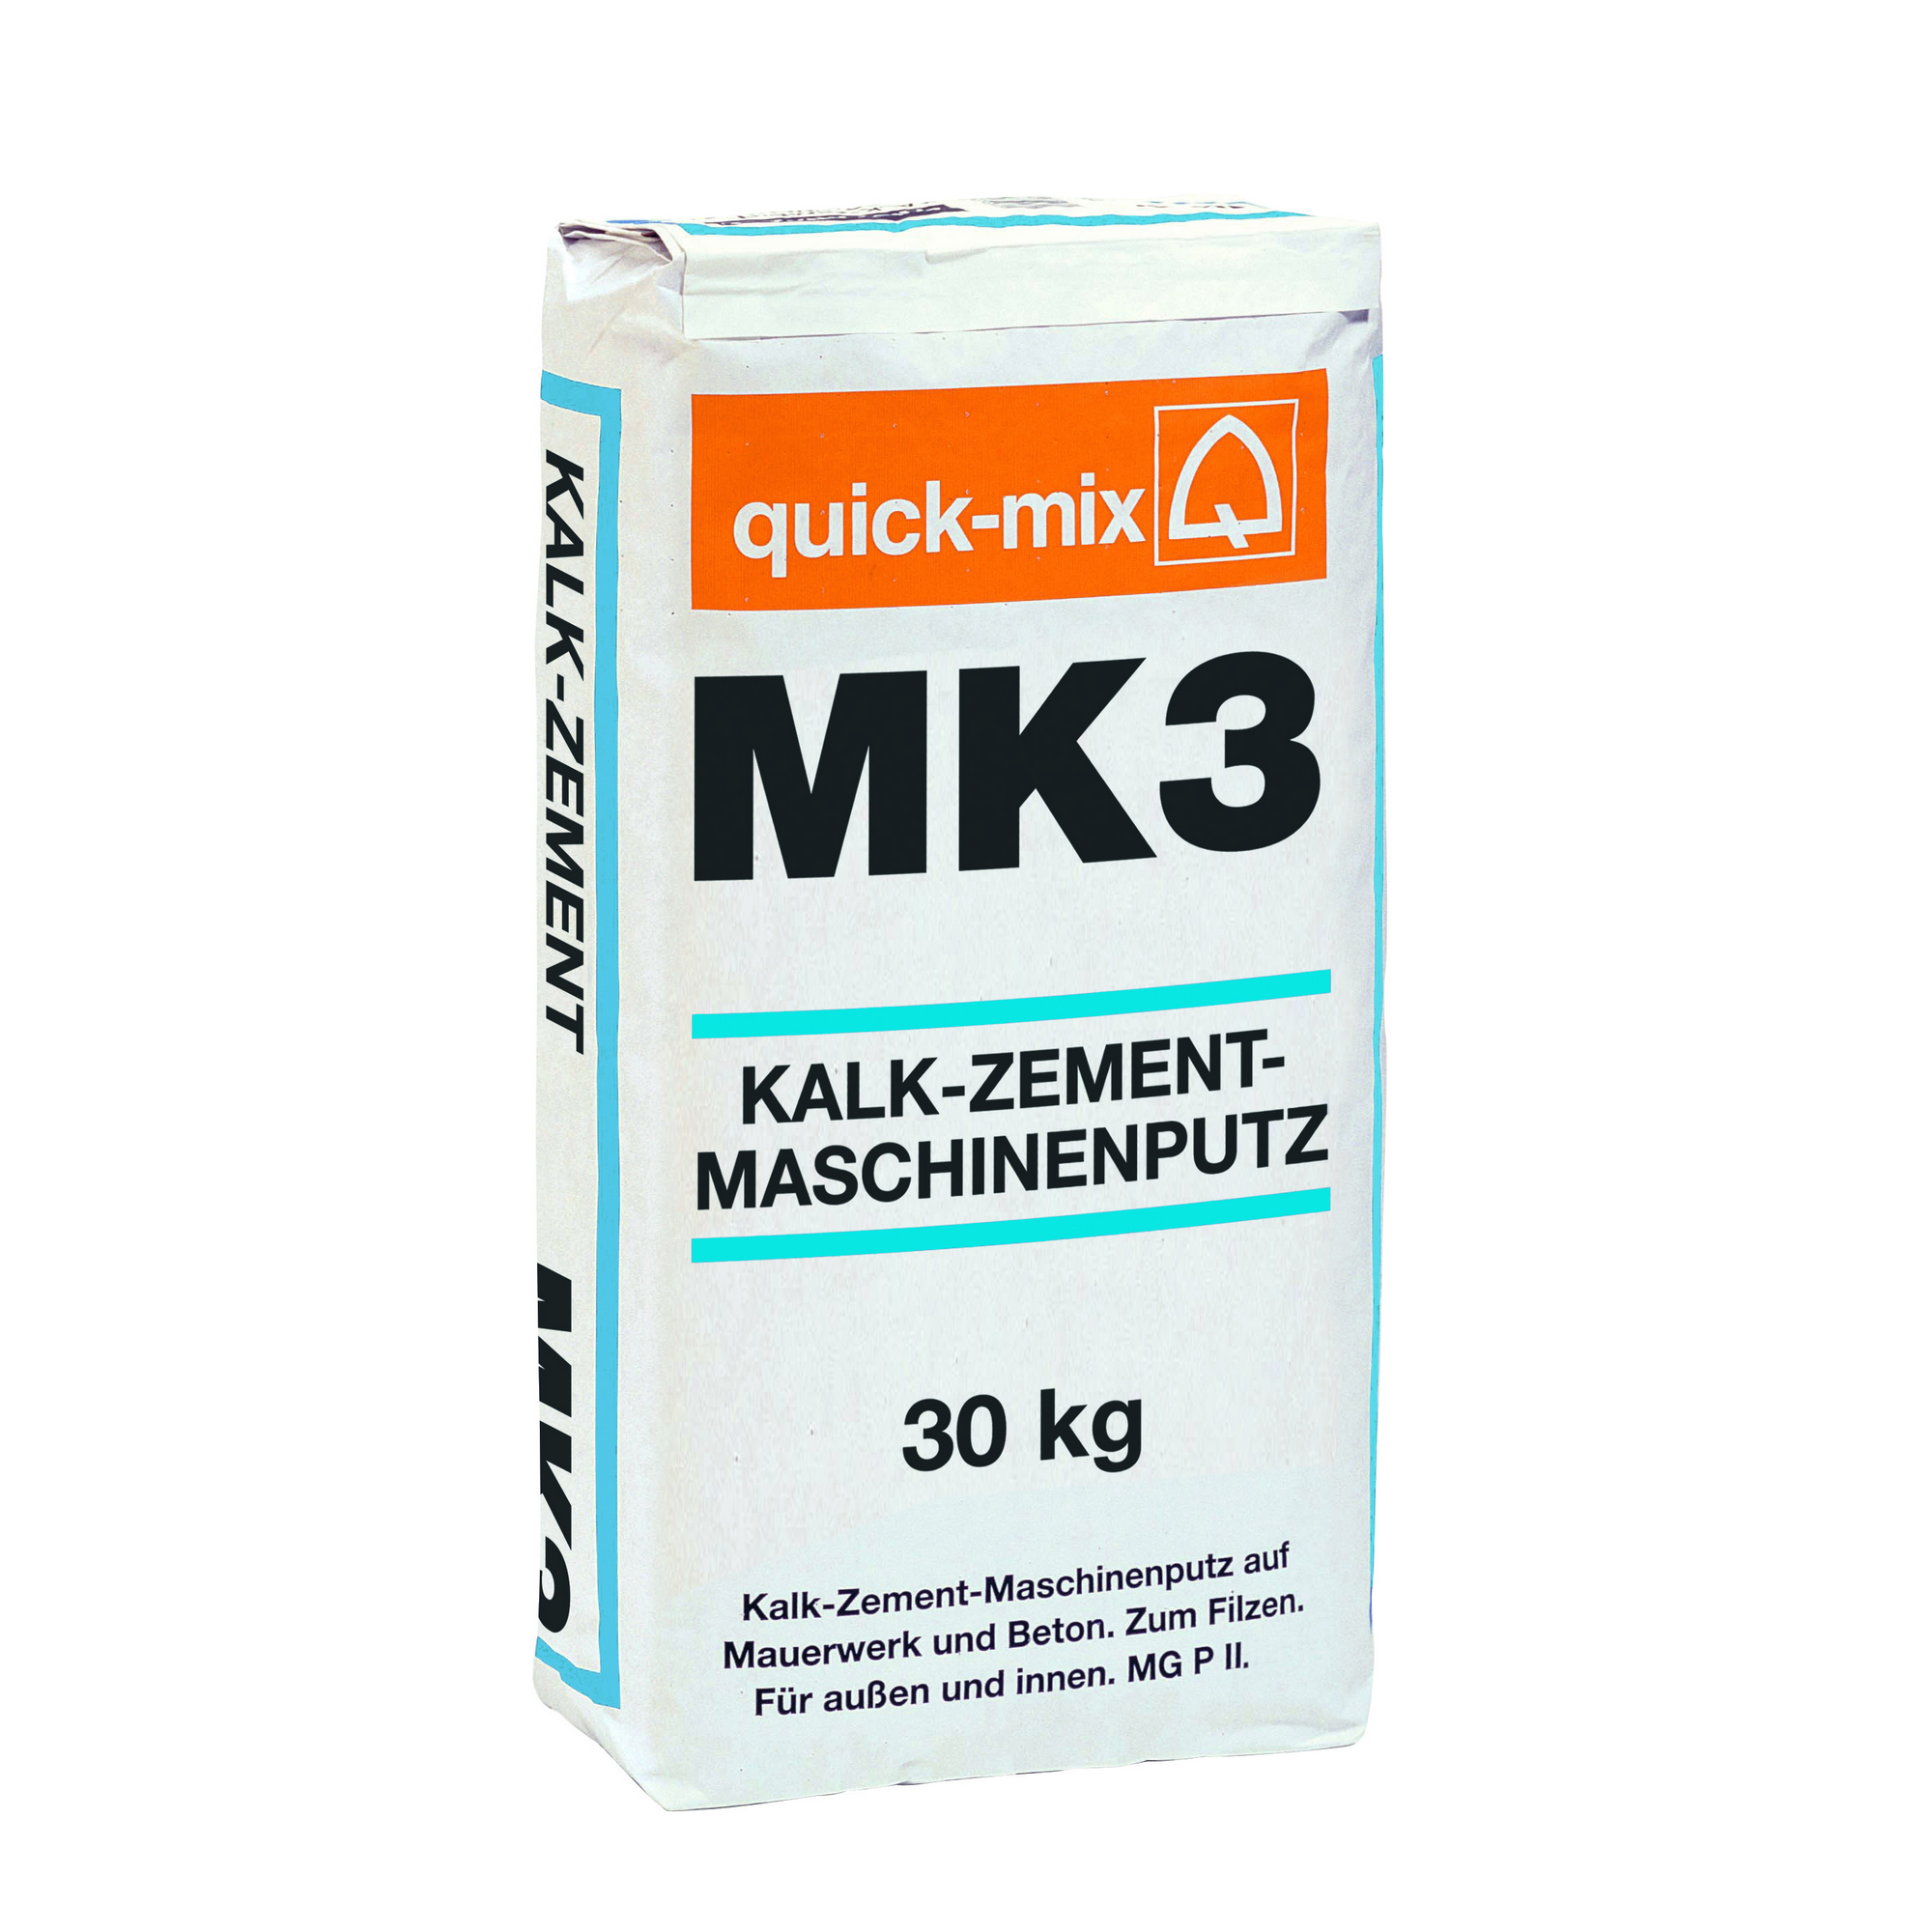 Kalk-Zement-Maschinenputz 30 kg + product picture